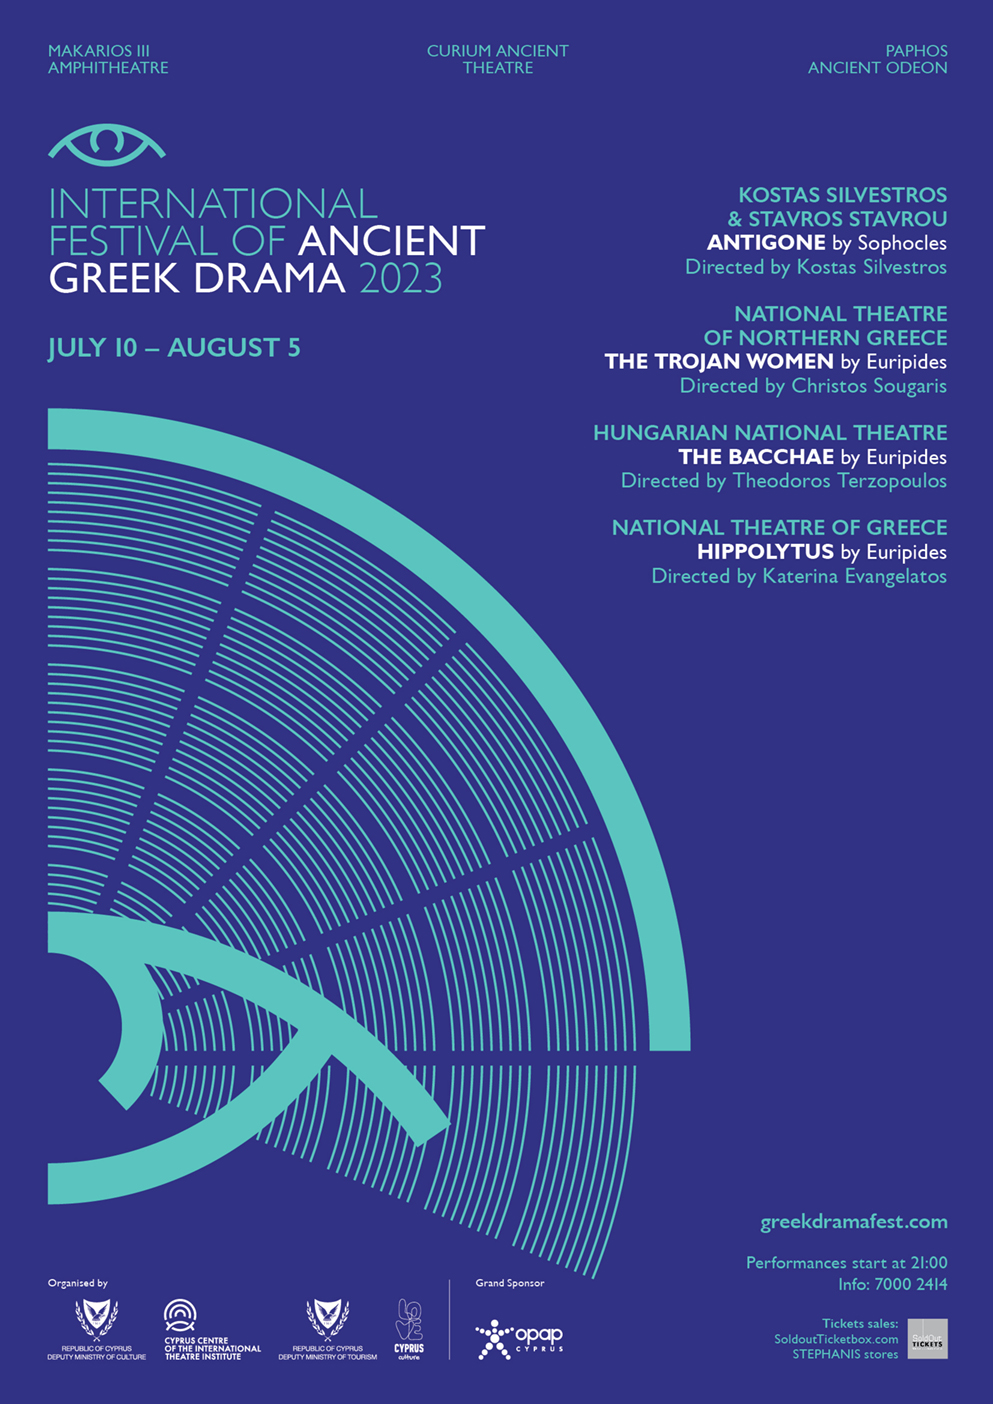 INTERNATIONAL FESTIVAL OF ANCIENT GREEK DRAMA 2023